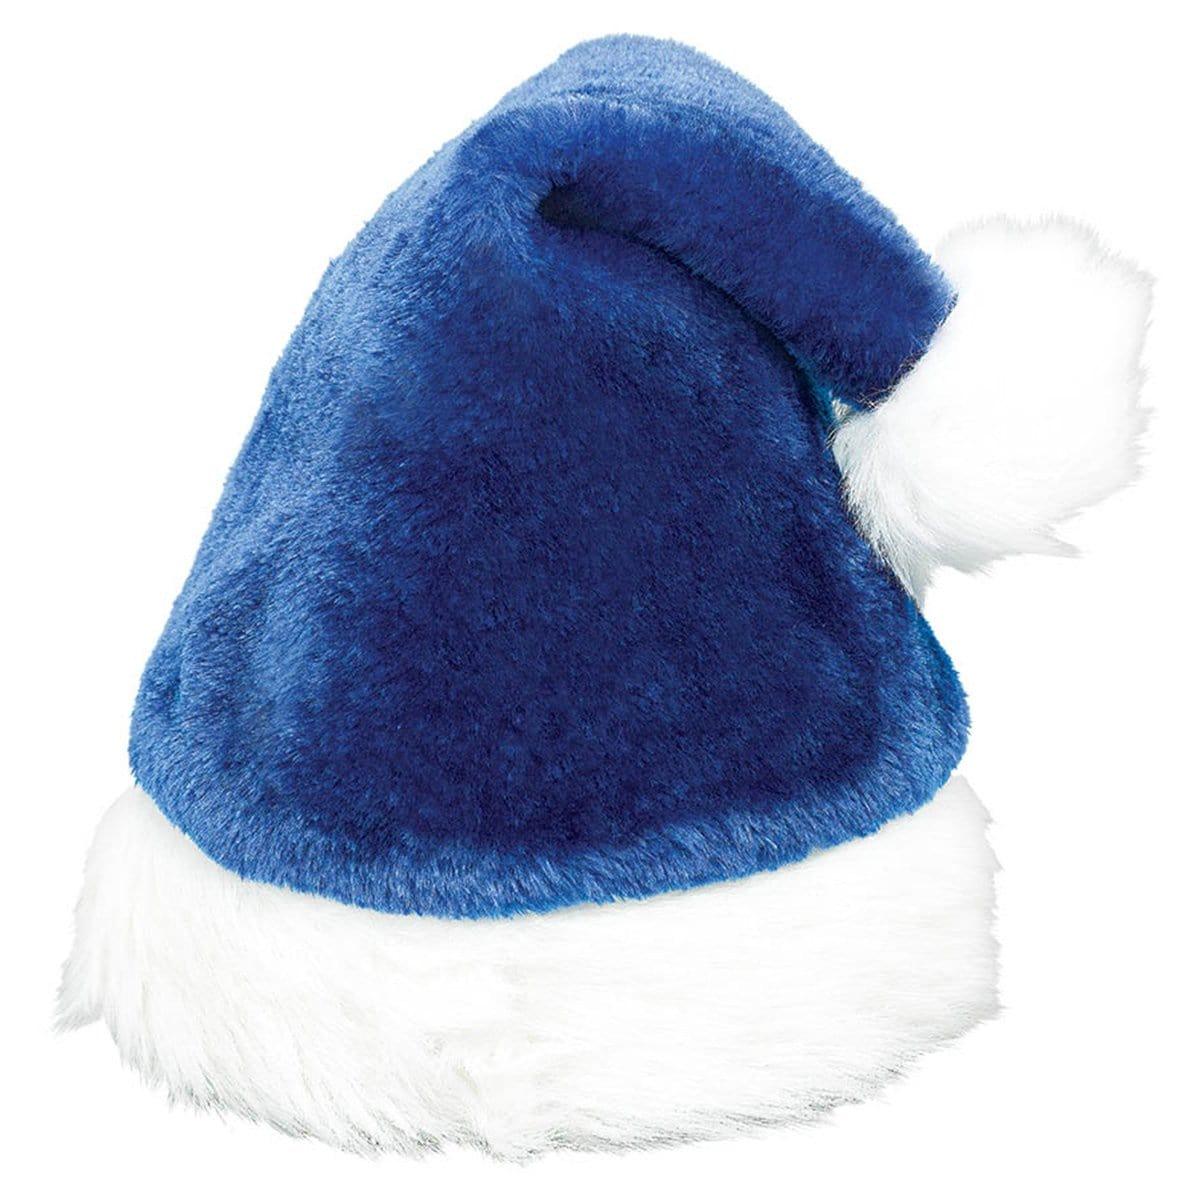 Buy Christmas Santa Hat - Blue sold at Party Expert